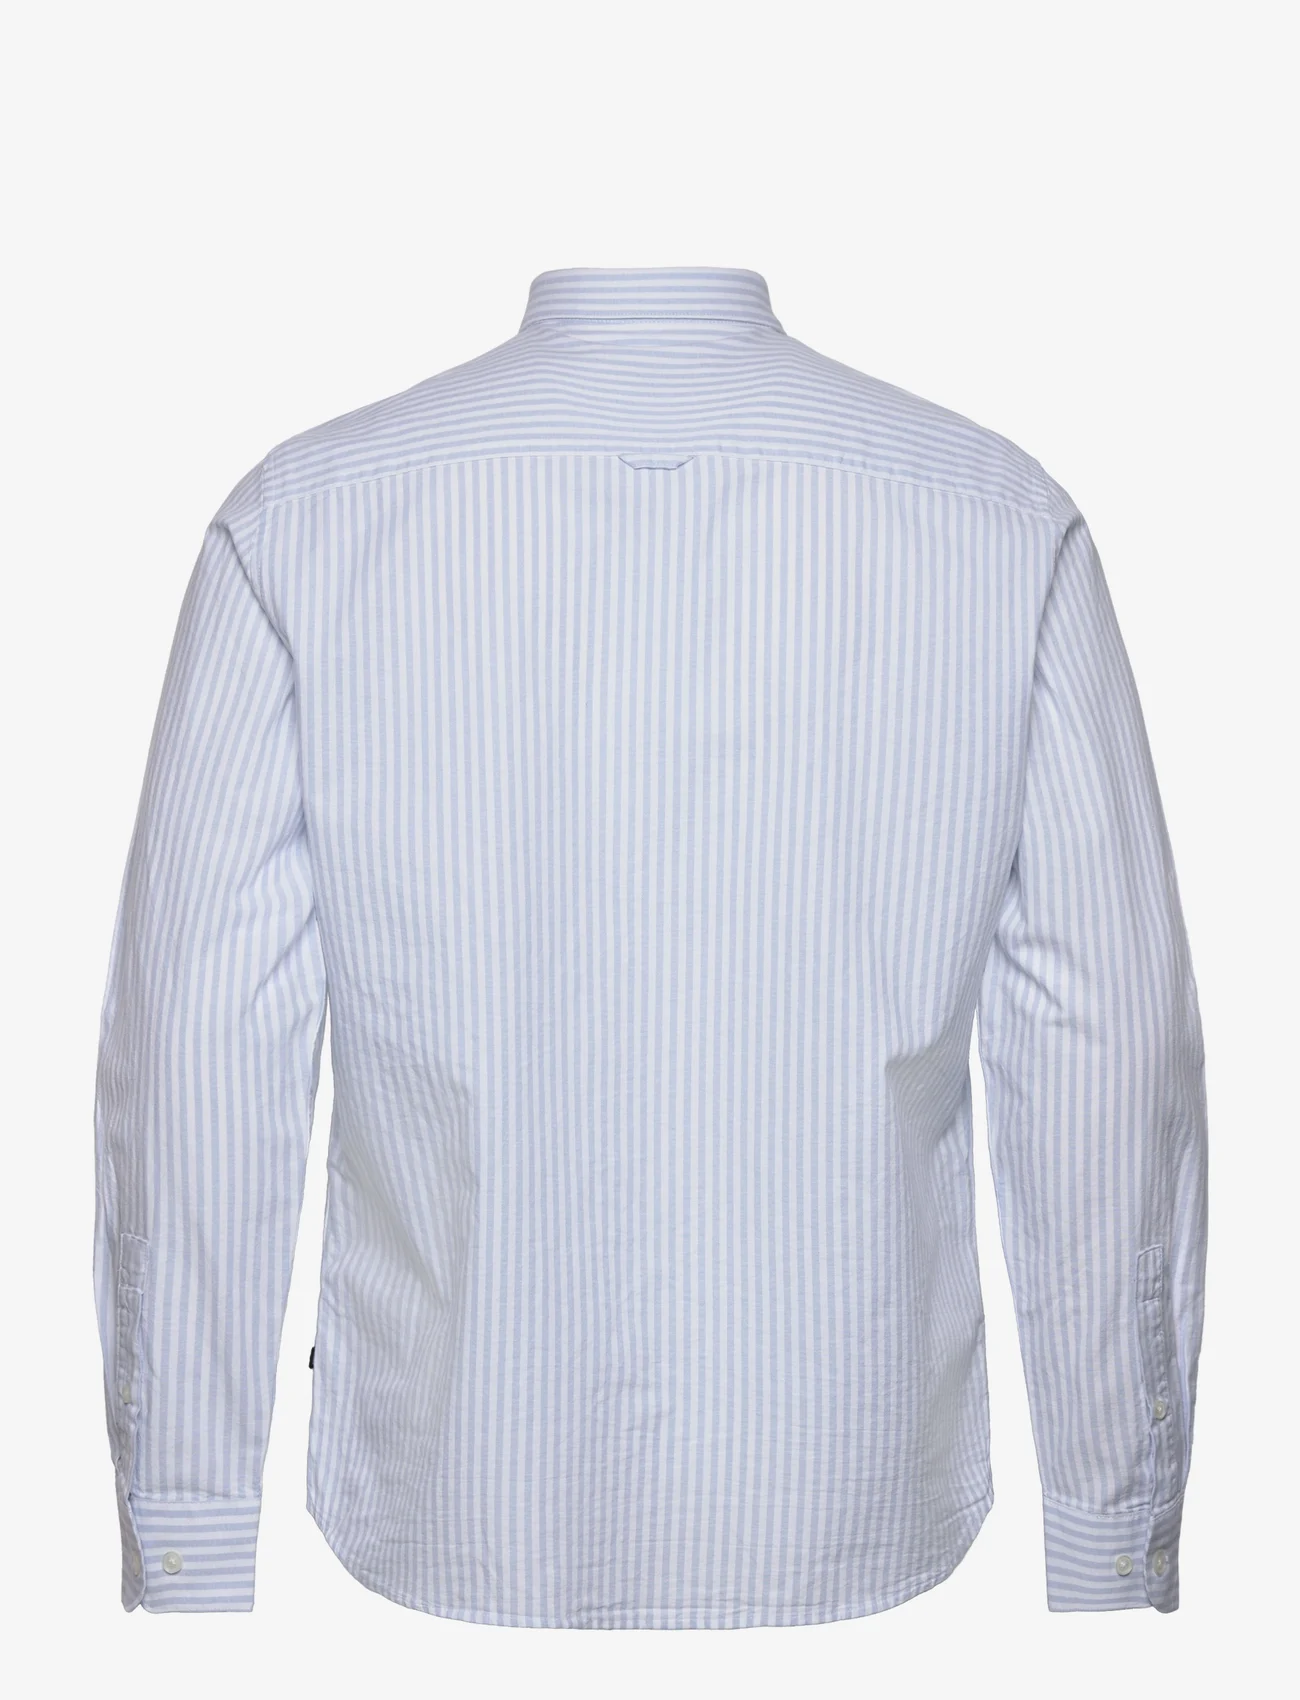 Matinique - MAtrostol BD - business skjortor - white - 1